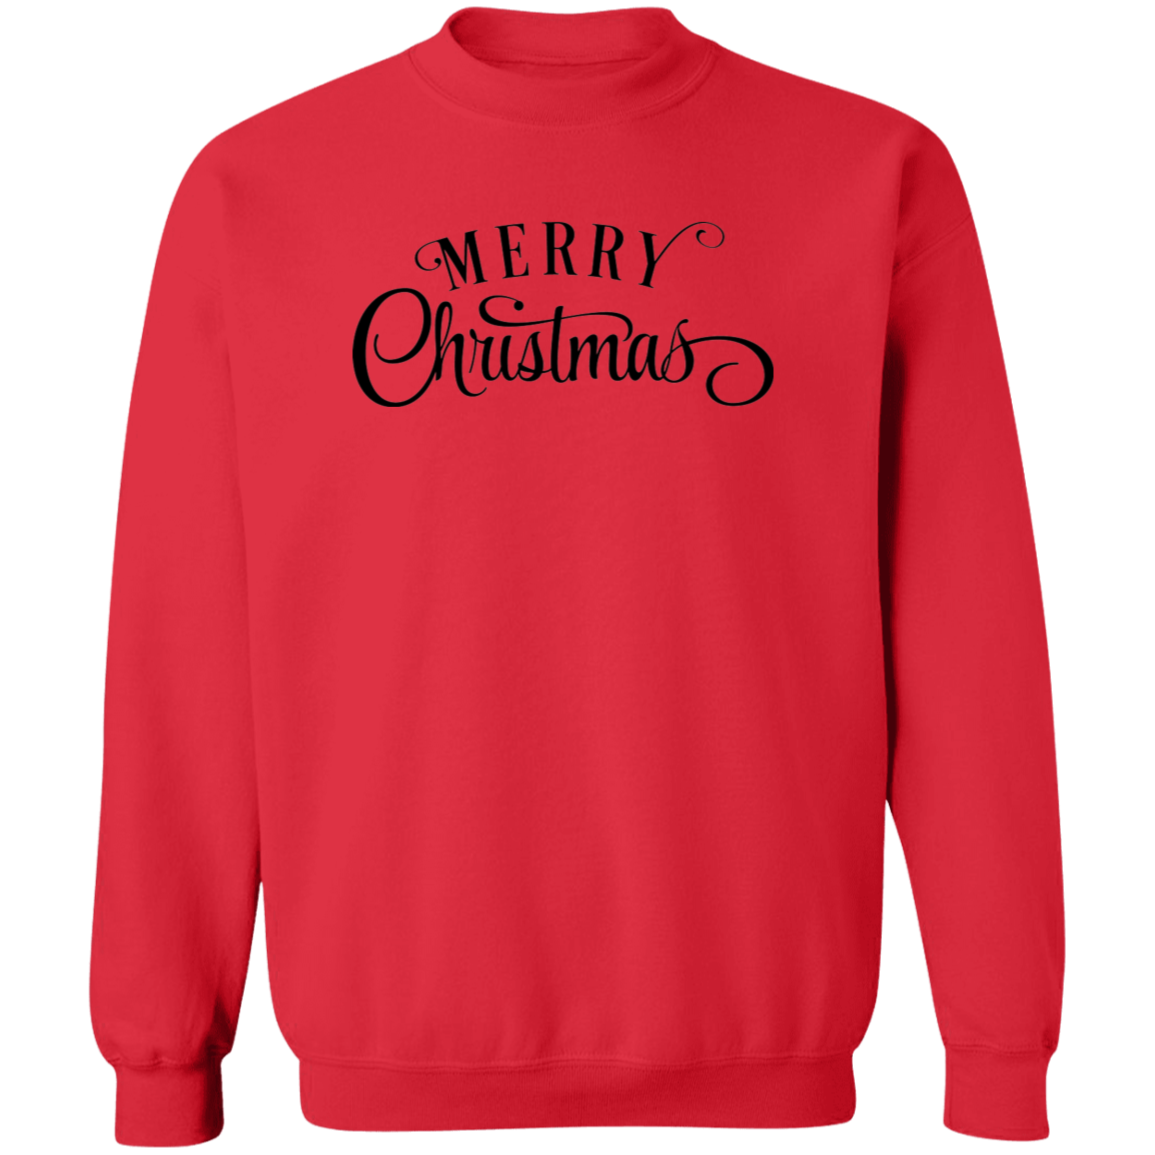 Merry Christmas 1 G180 Crewneck Pullover Sweatshirt